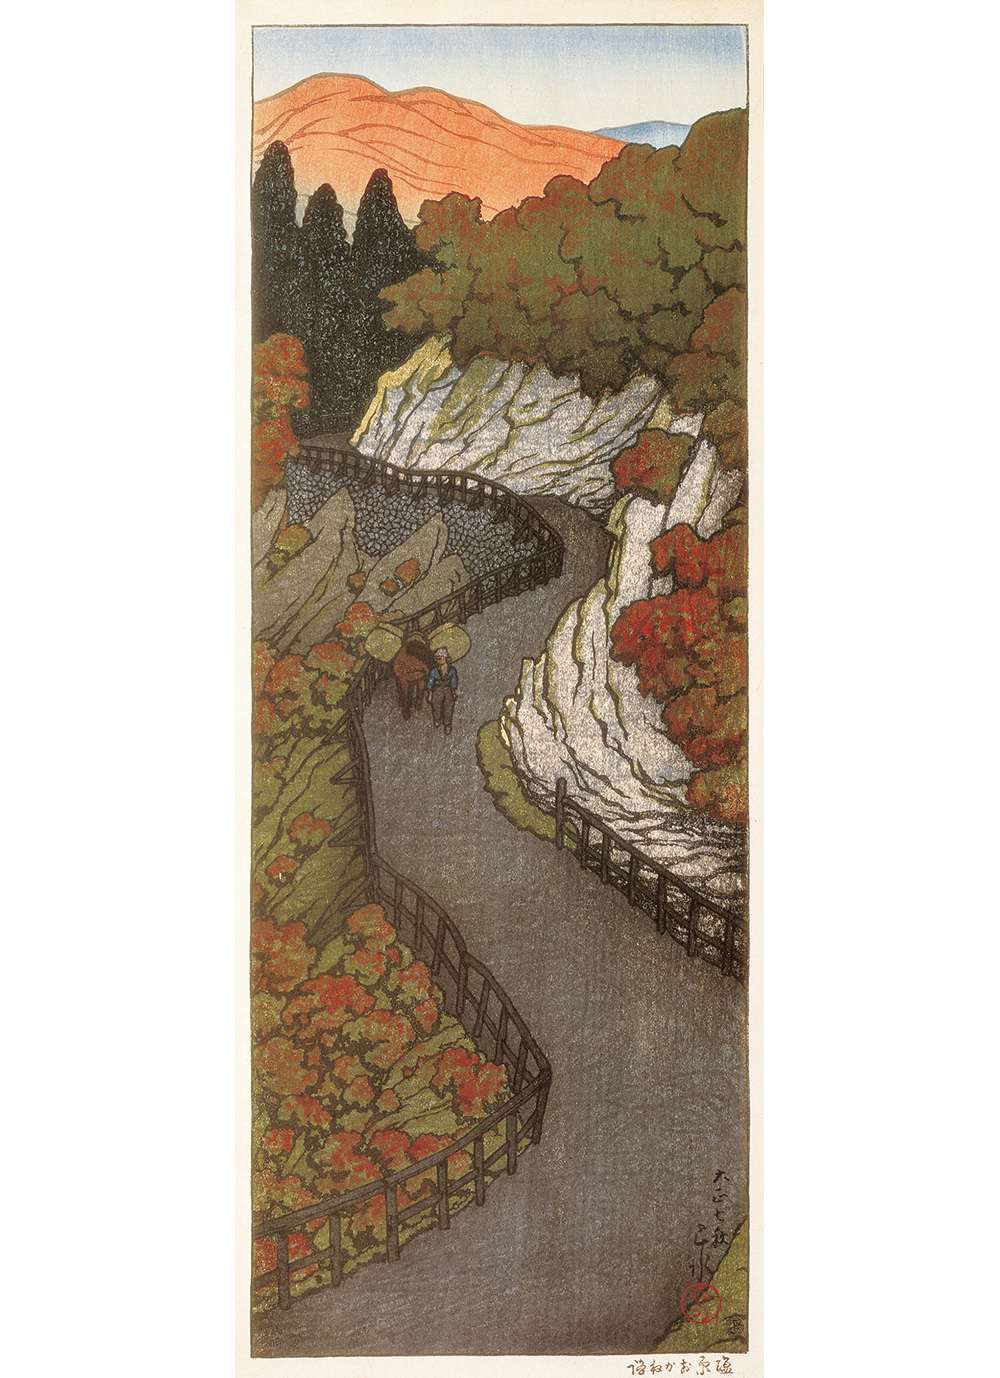 「旅情詩人」川瀬巴水の風景木版画約280点を展示。ＳＯＭＰＯ 